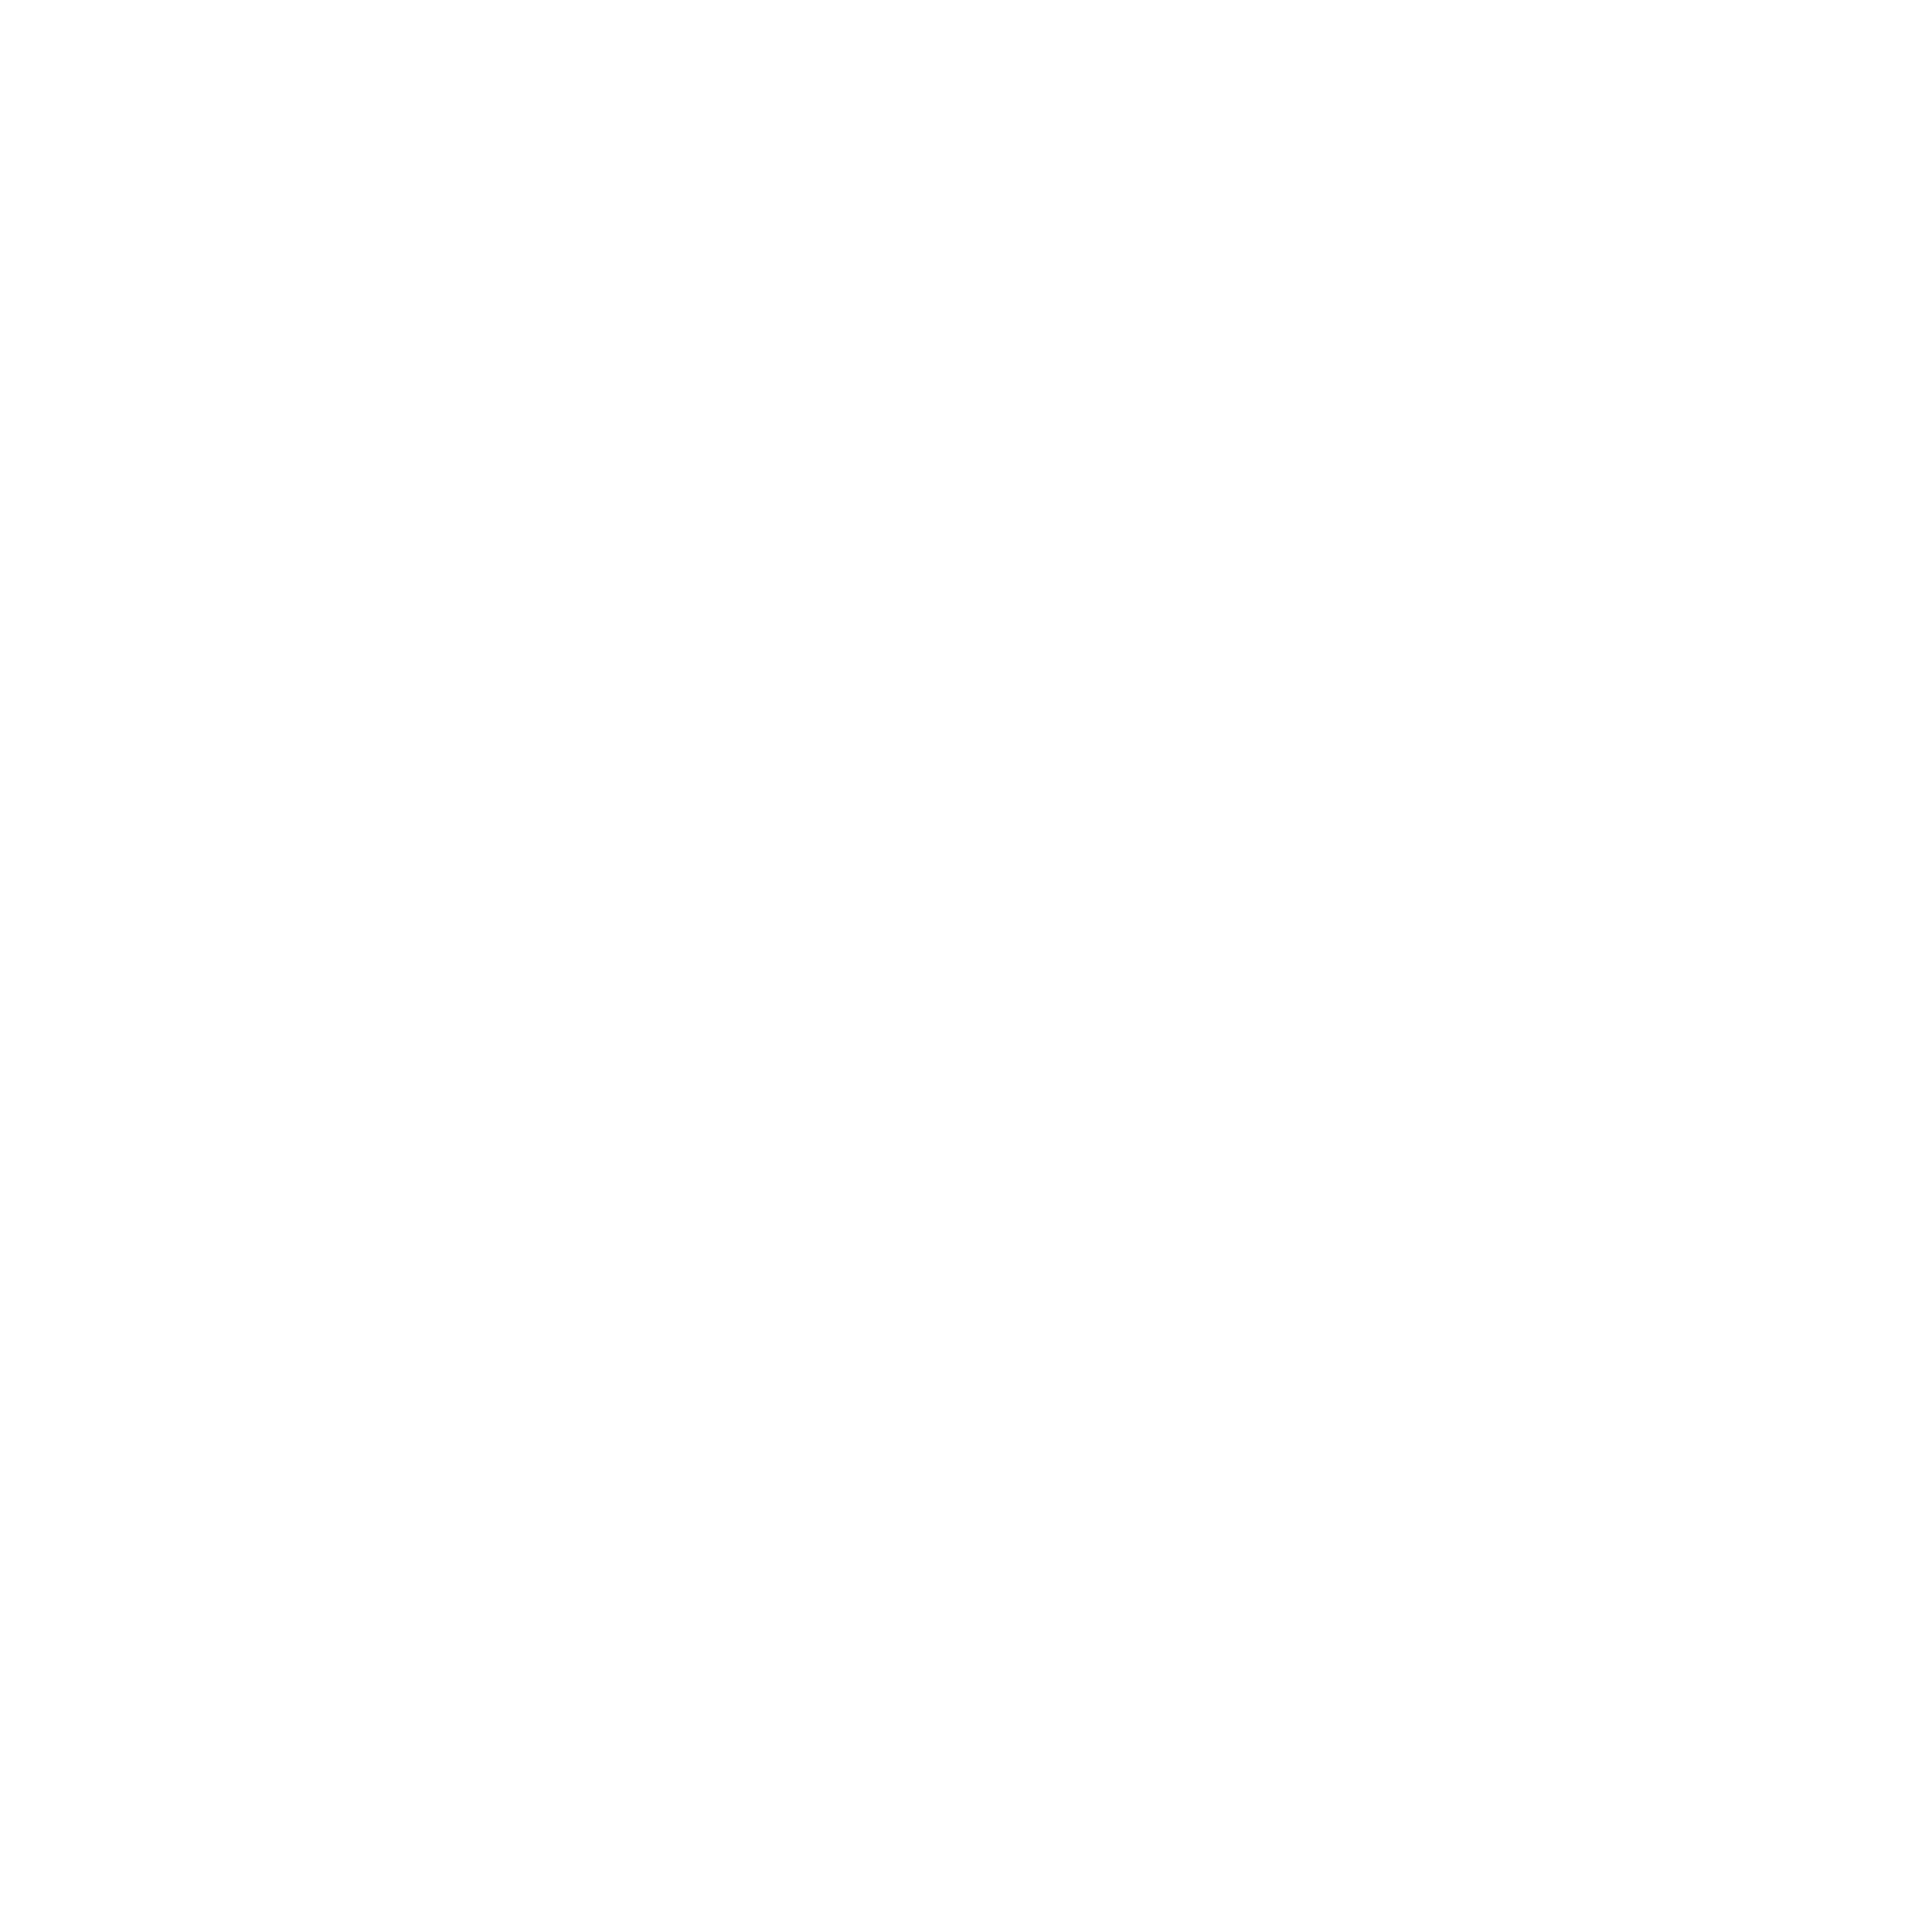 Zahn im Kreis